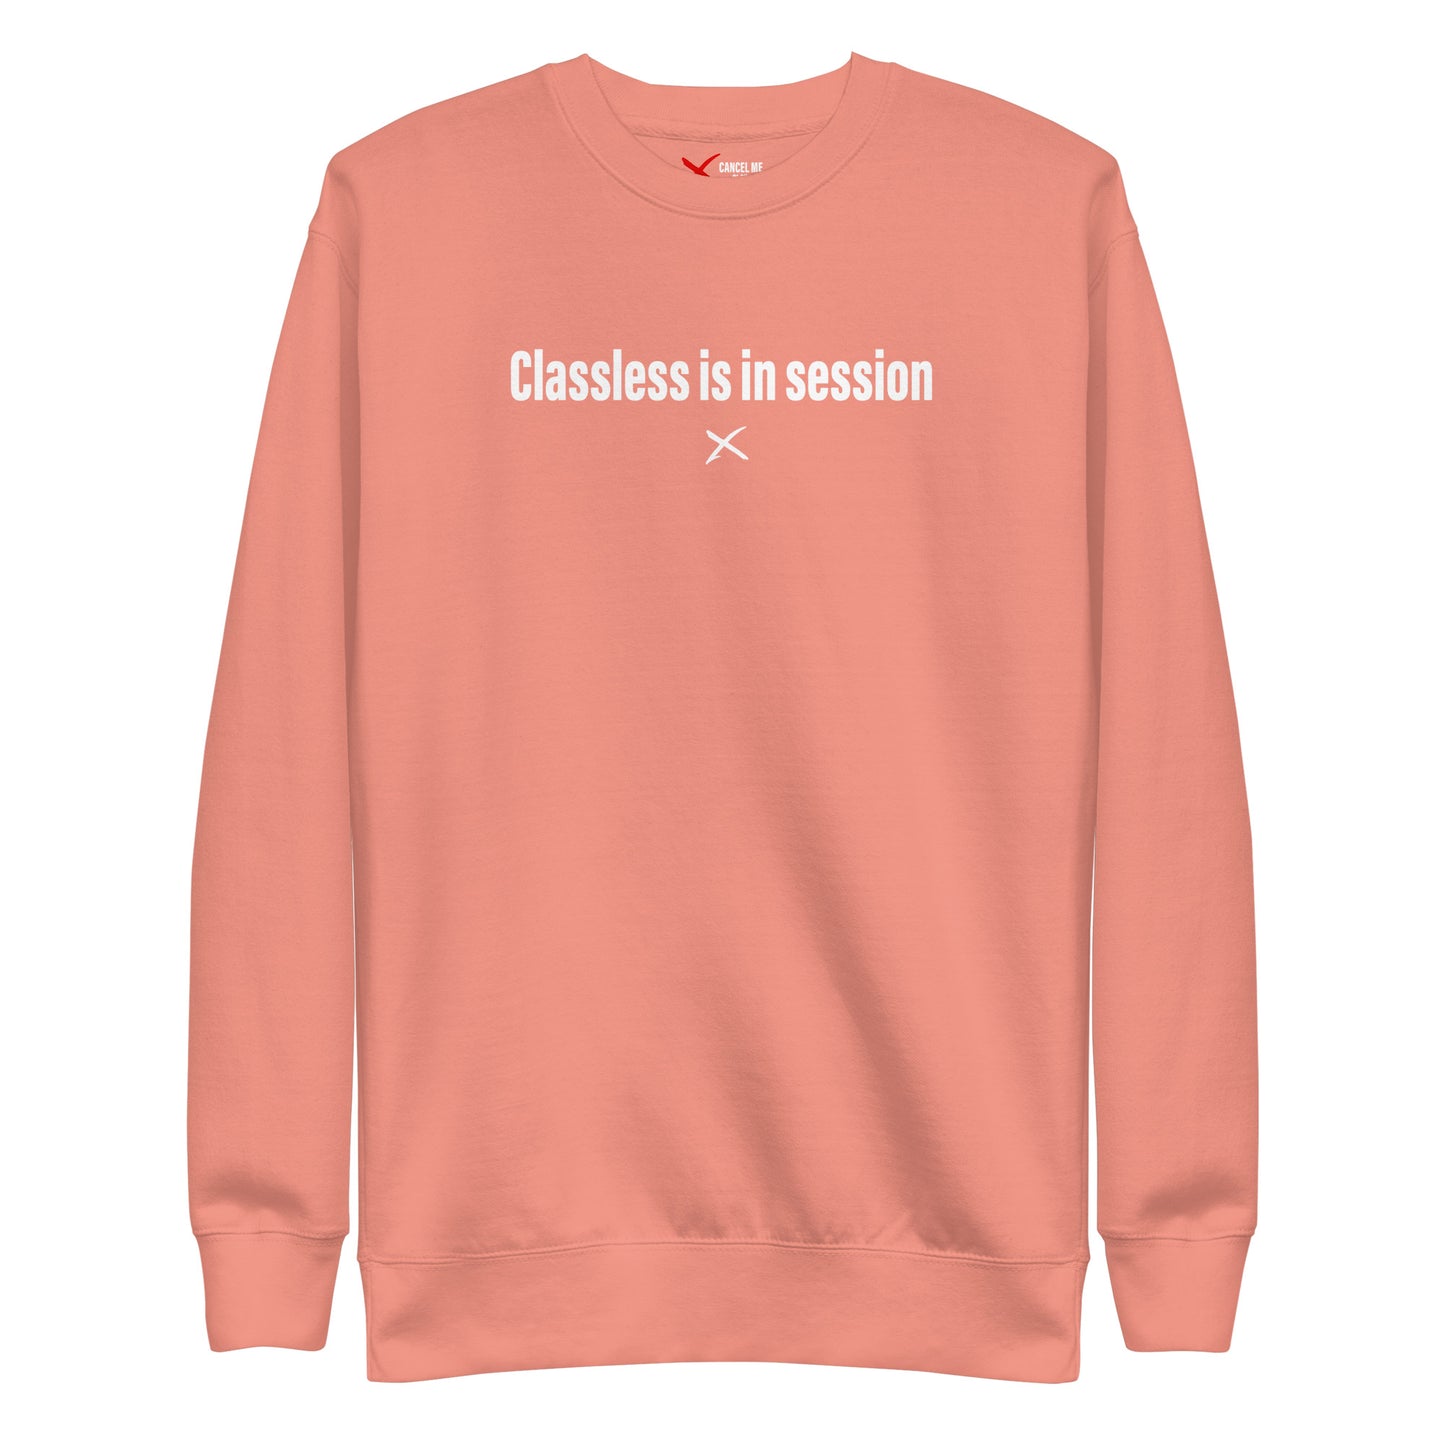 Classless is in session - Sweatshirt